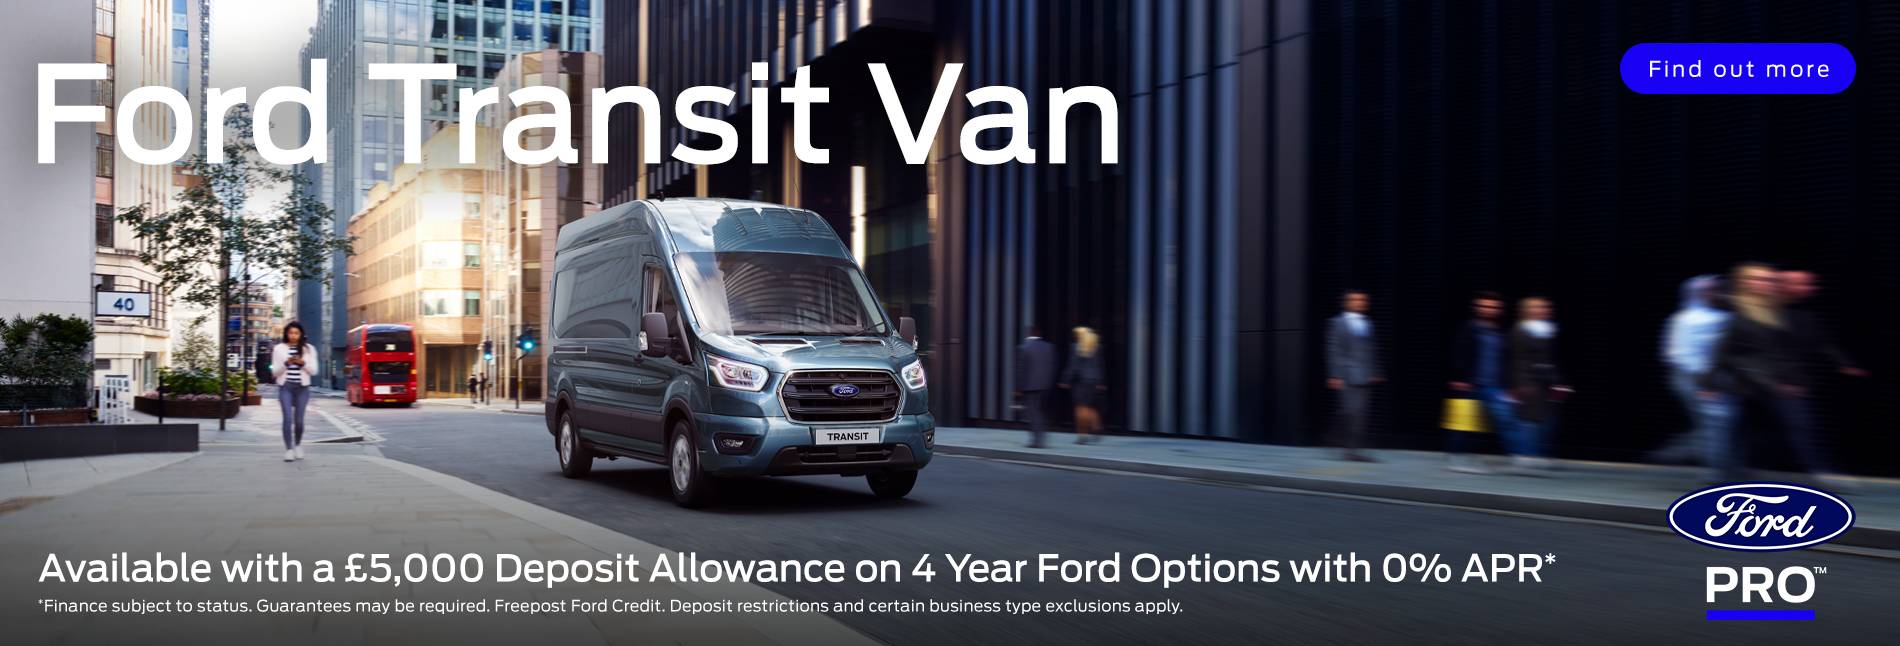 Ford Transit Van 0% APR offer